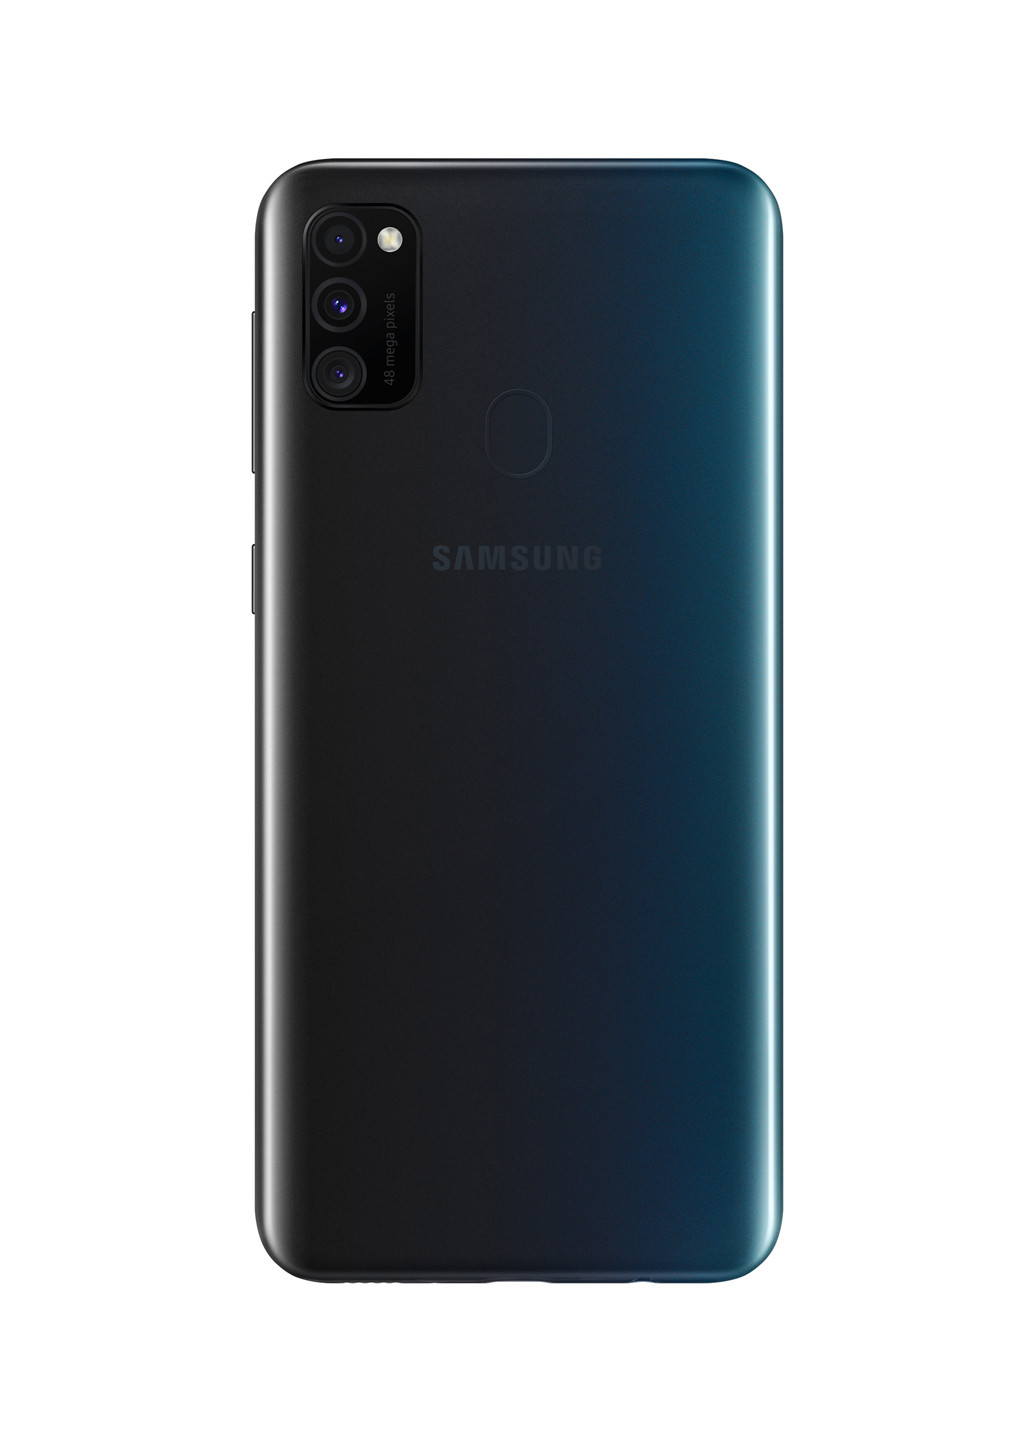 Смартфон Samsung galaxy m30s 4/64gb opal black (sm-m307fzkusek) (152569812)